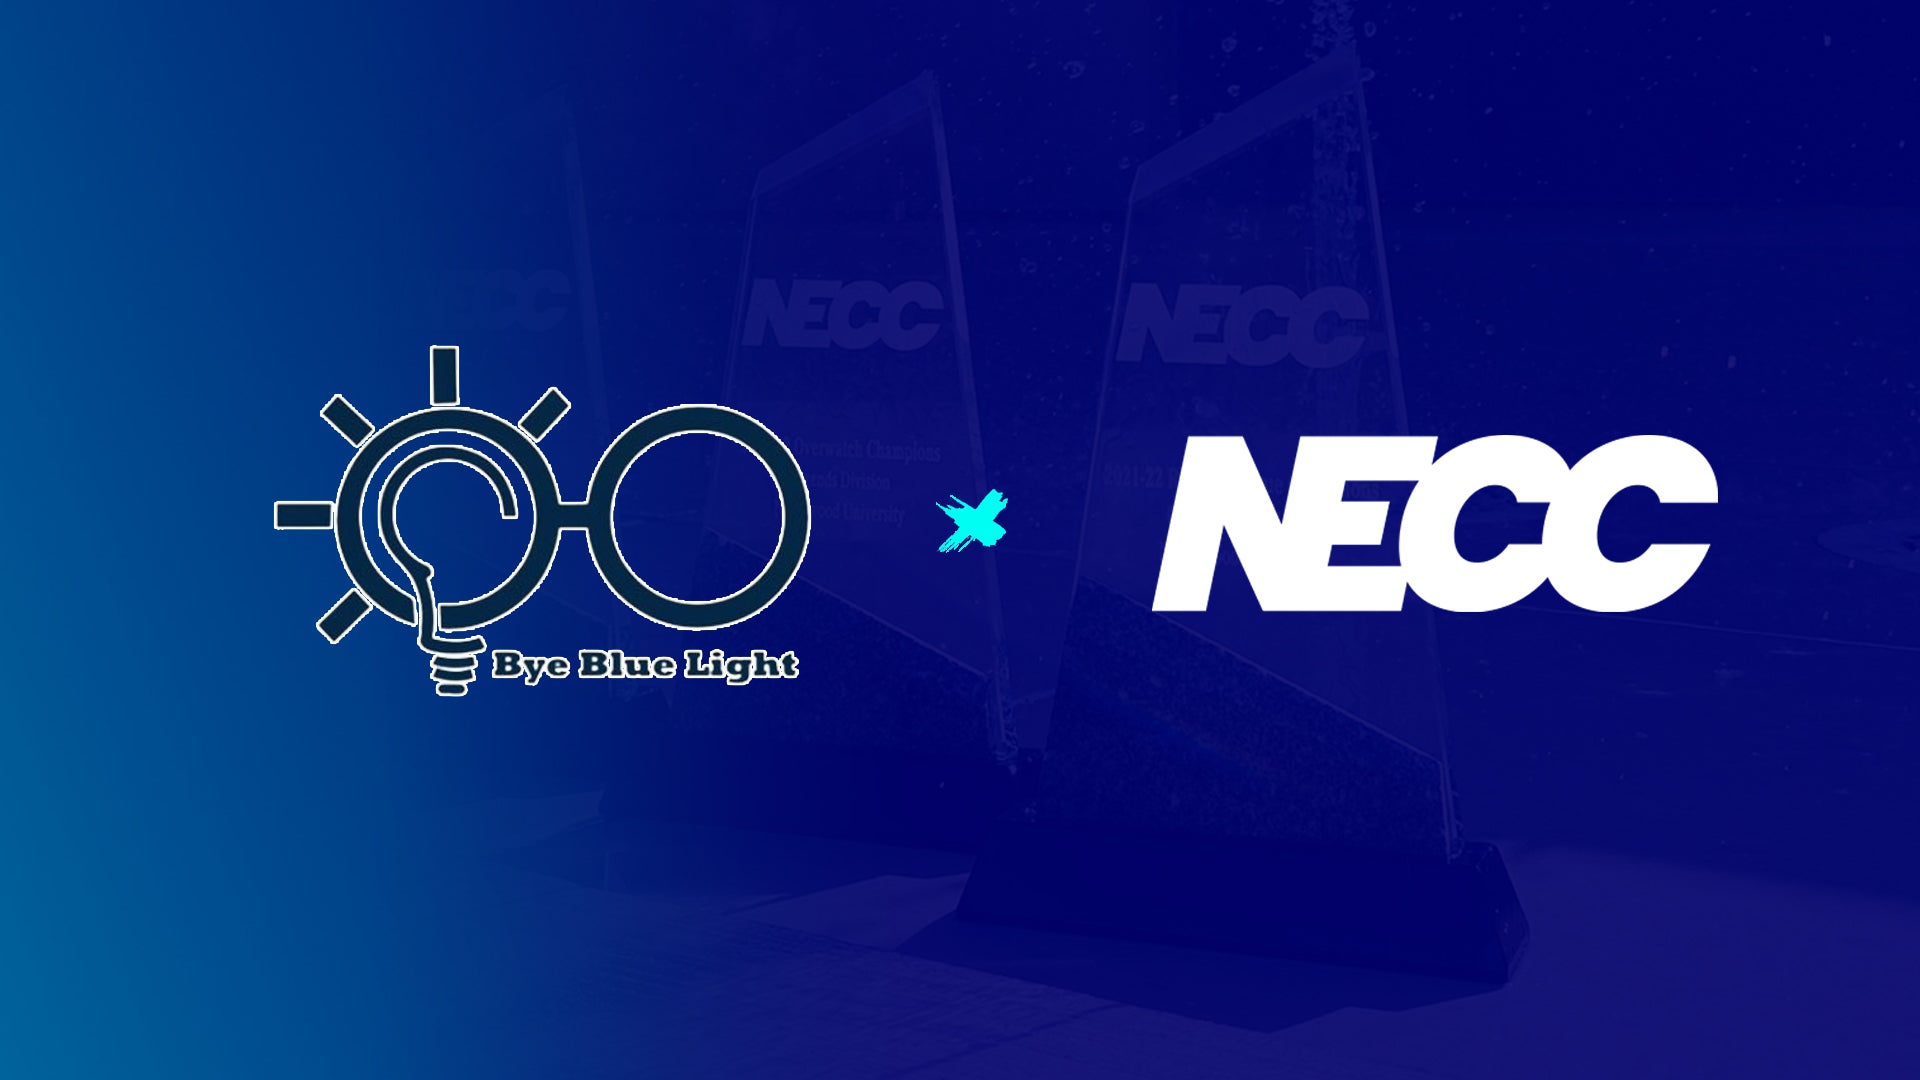 NECC Announces Partnership with Bye Blue Light